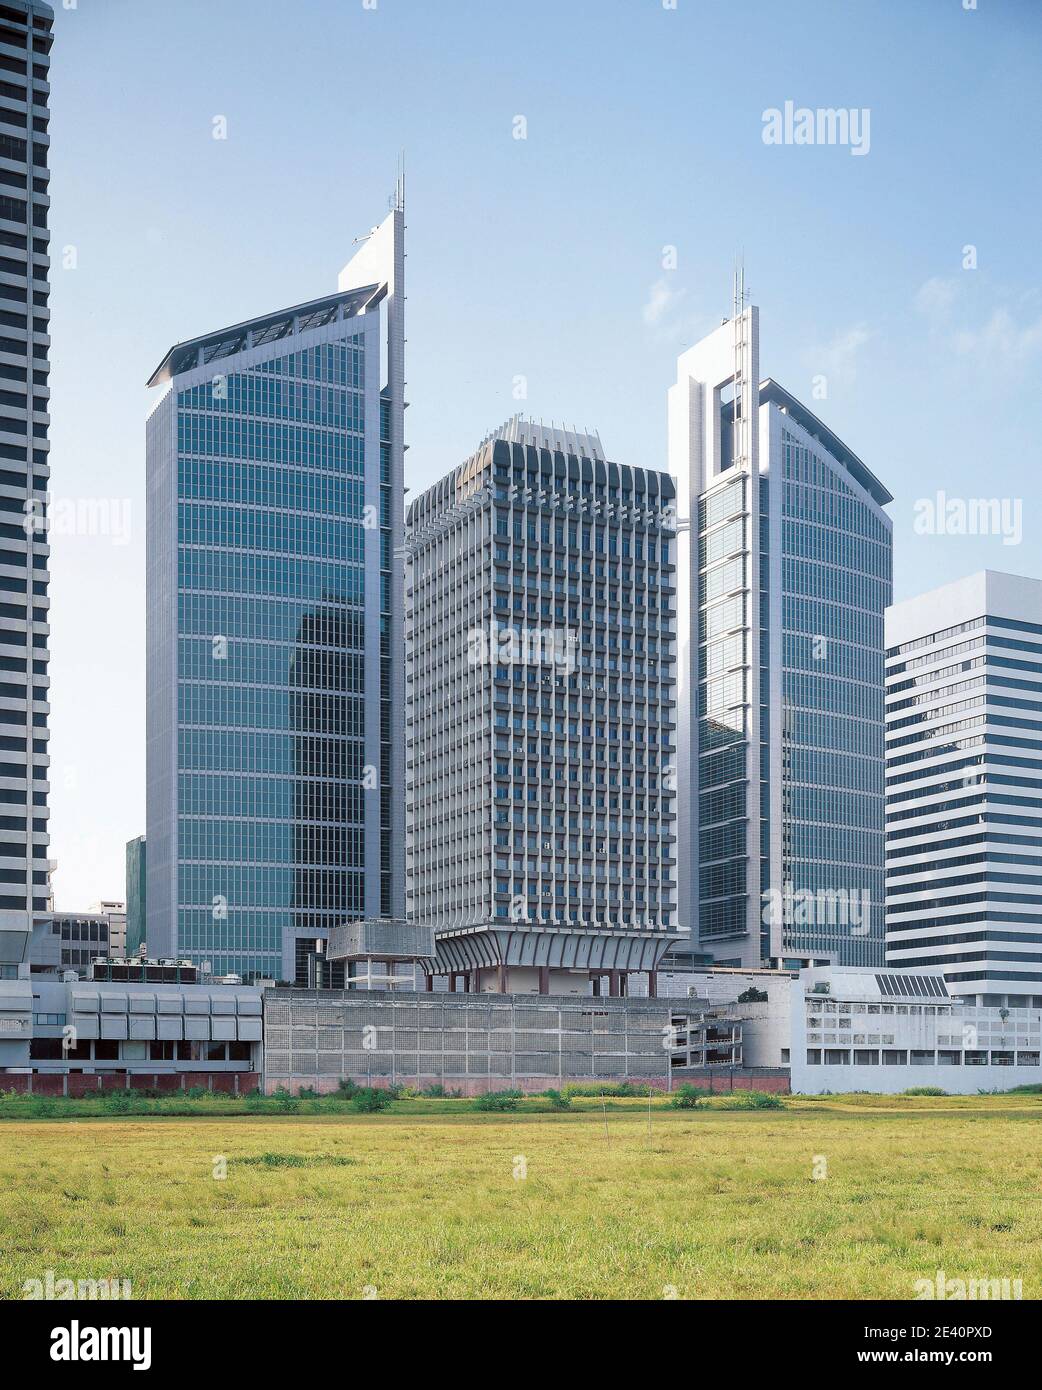 DOM033, SGX centres Singapore, Kohn, Pedersen Fox, hochhaus, high-rise building, multi-story building, grattacielo, rascacielos, SGX centres Singapore Stock Photo